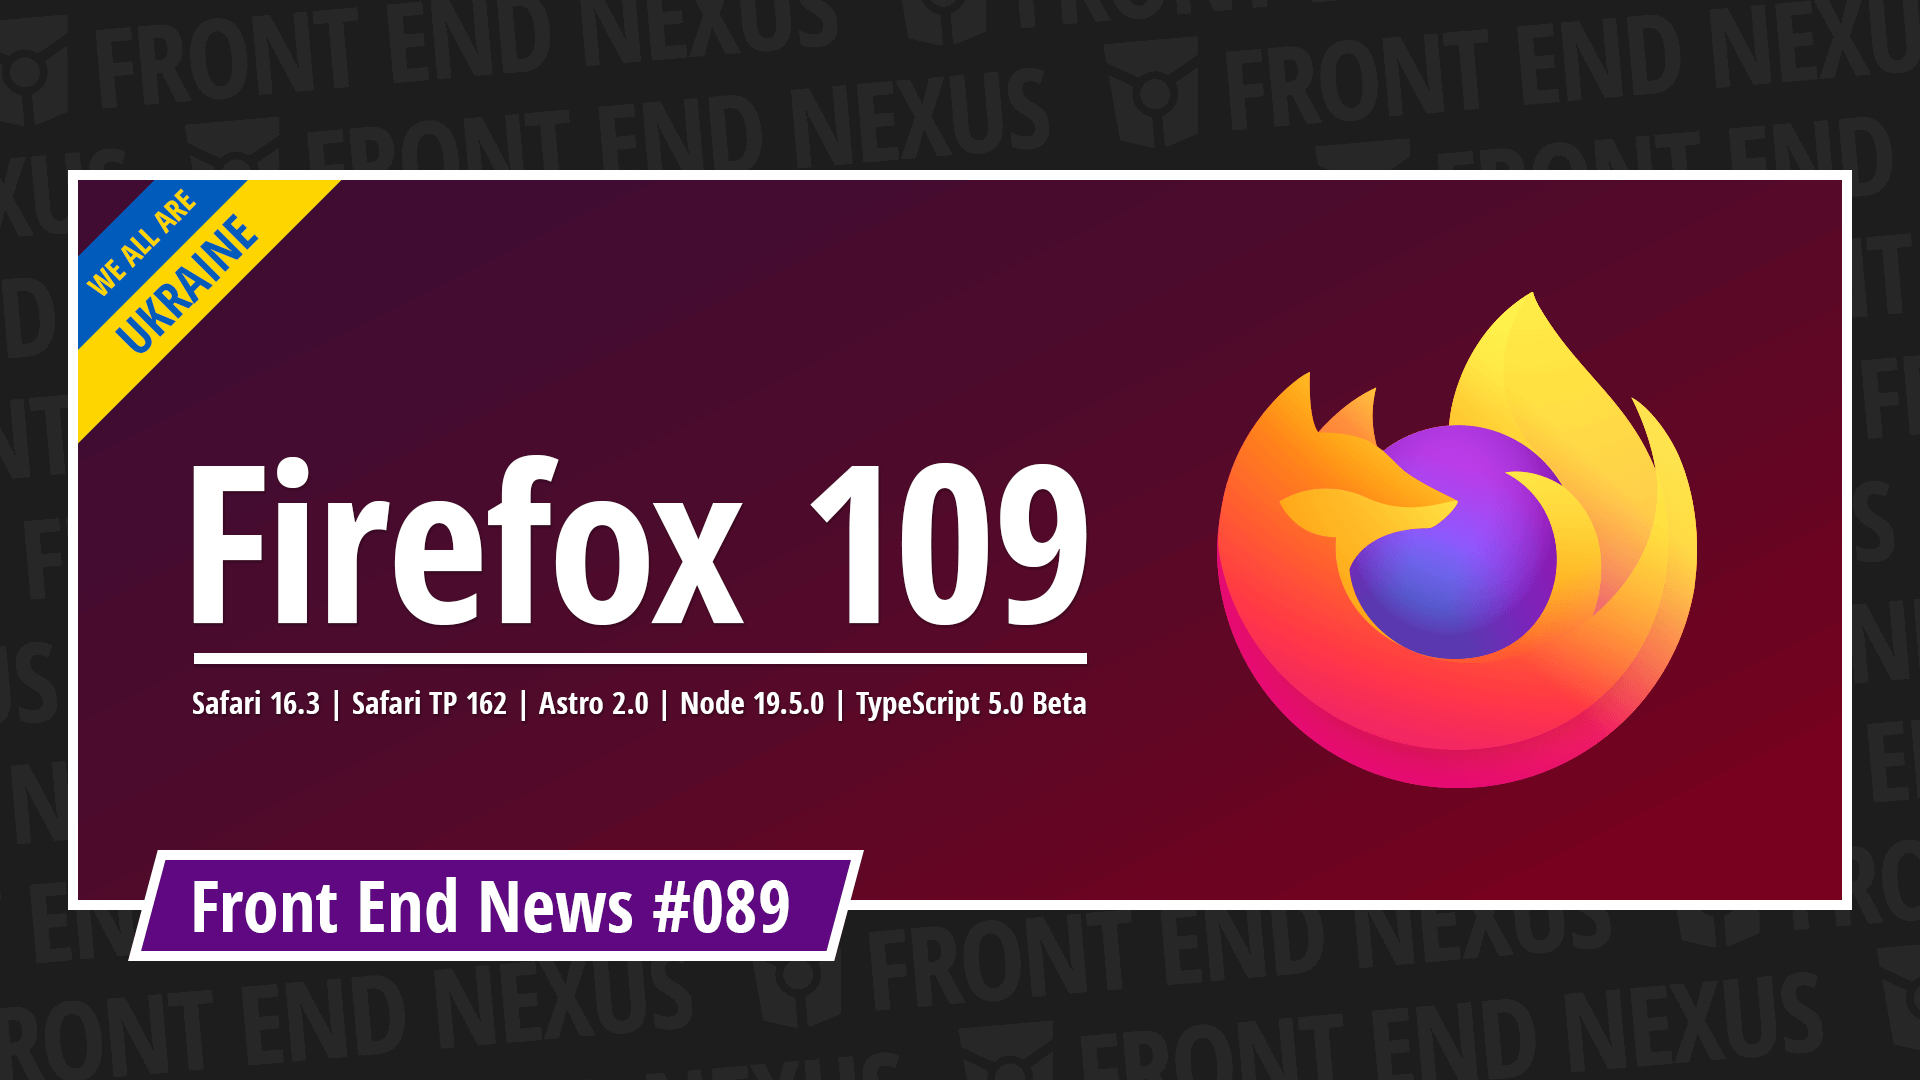 Firefox 109, Safari 16.3, Safari TP 162, Astro 2.0, Node v19.5.0, TypeScript 5.0 Beta, and more | Front End News #089